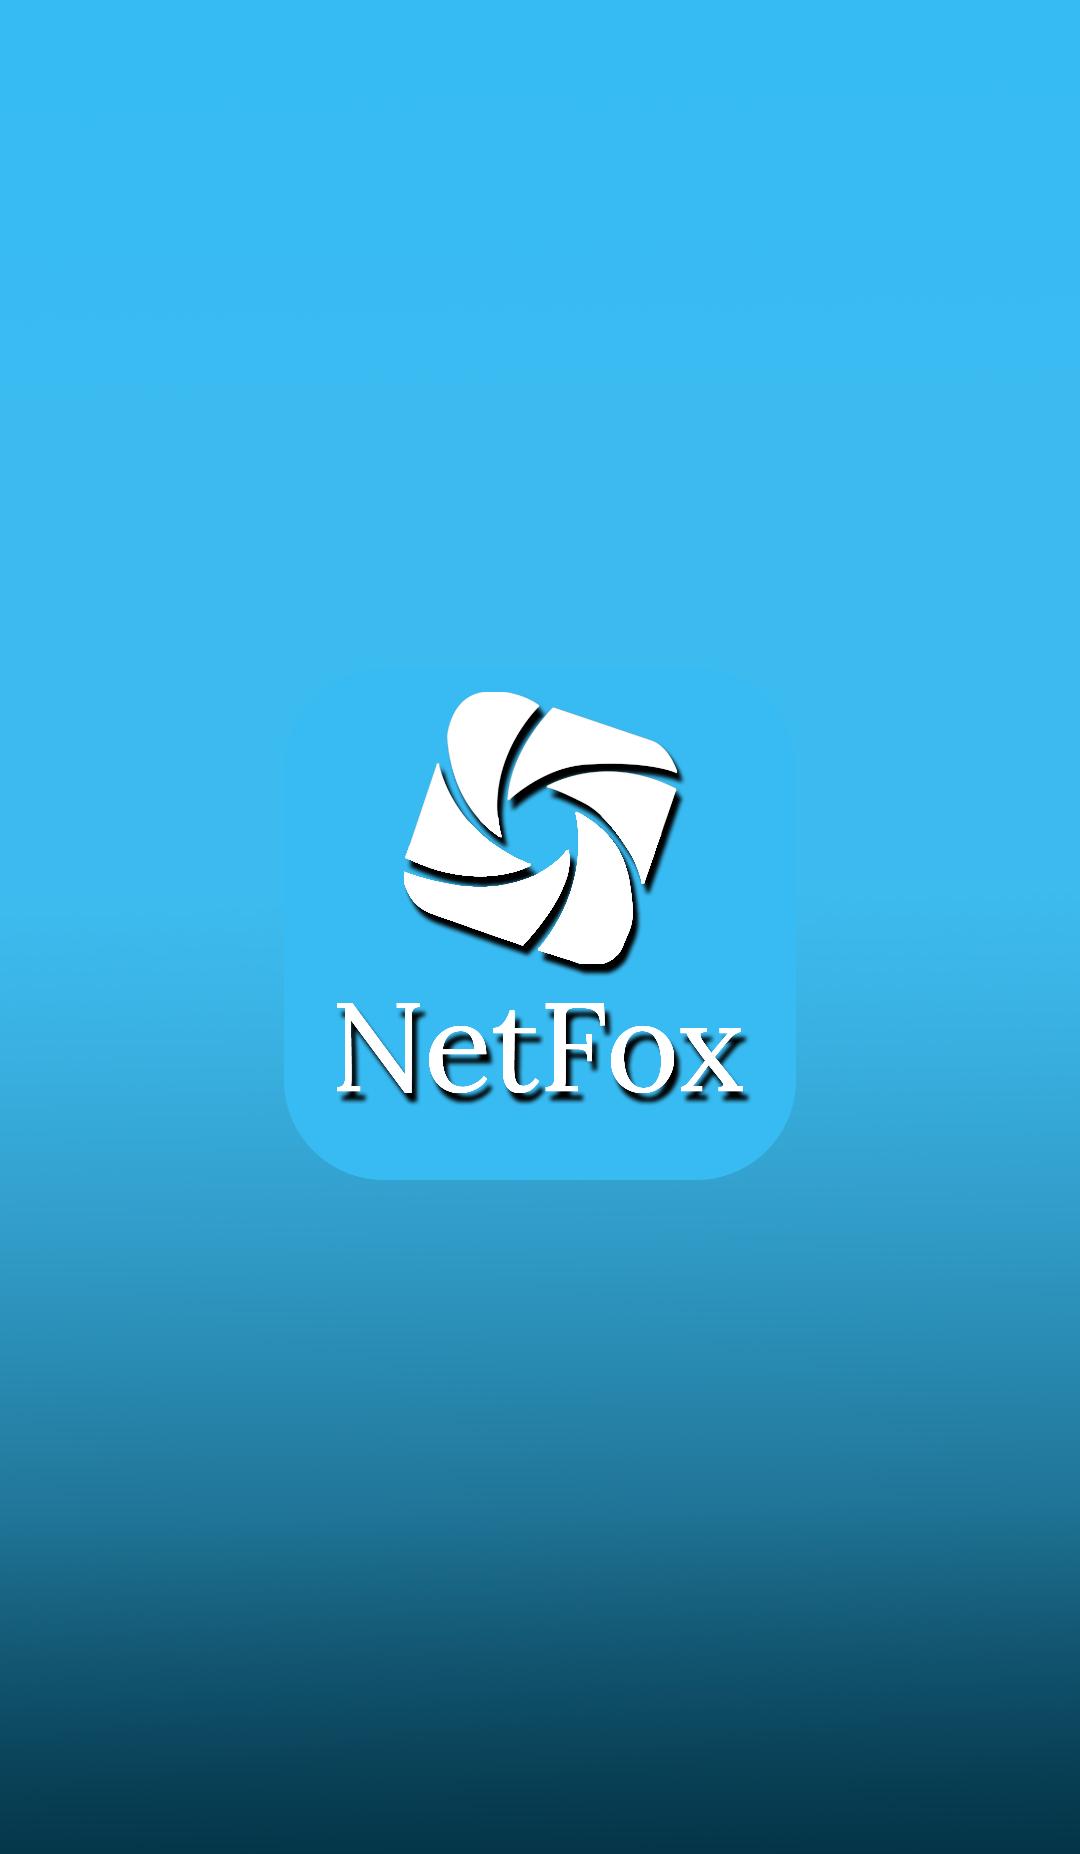 Fox net. Netfox. Fox net ВК. Netfox logo.